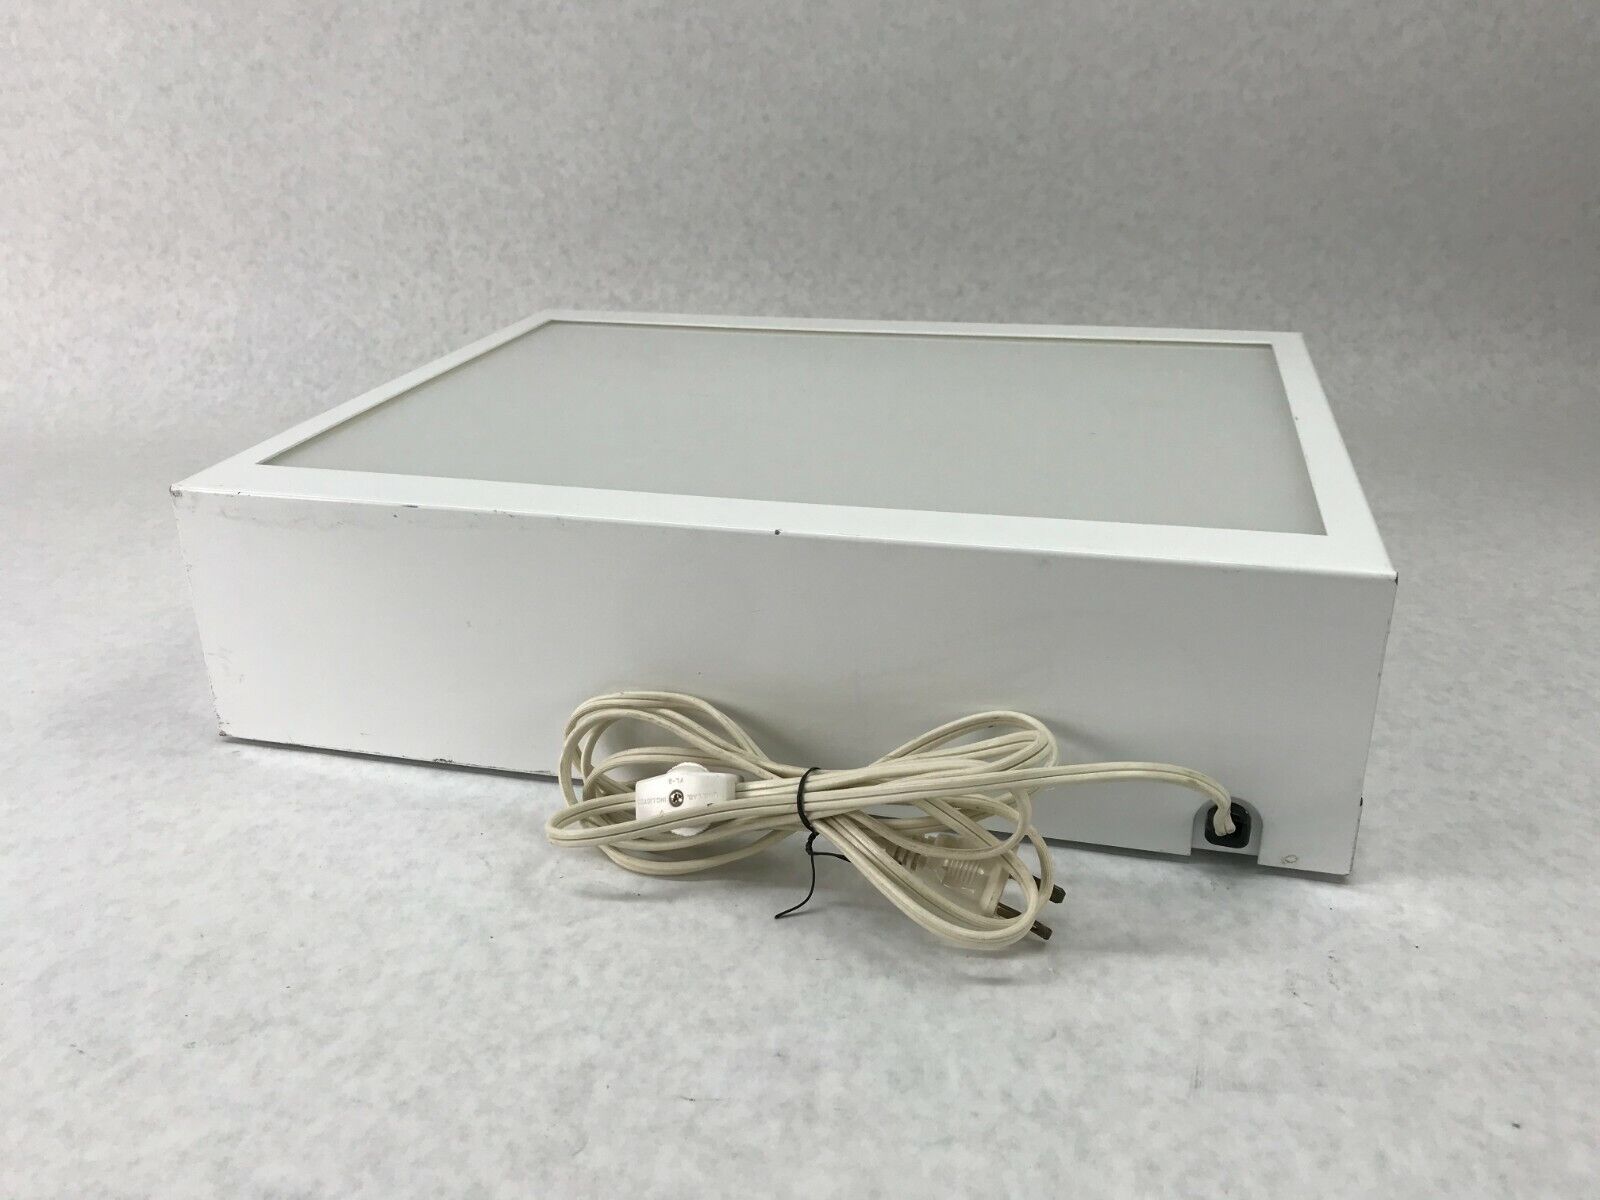 Stratagene 400510 White Light Box 120 VAC 0.5A 60 Hz - Tested